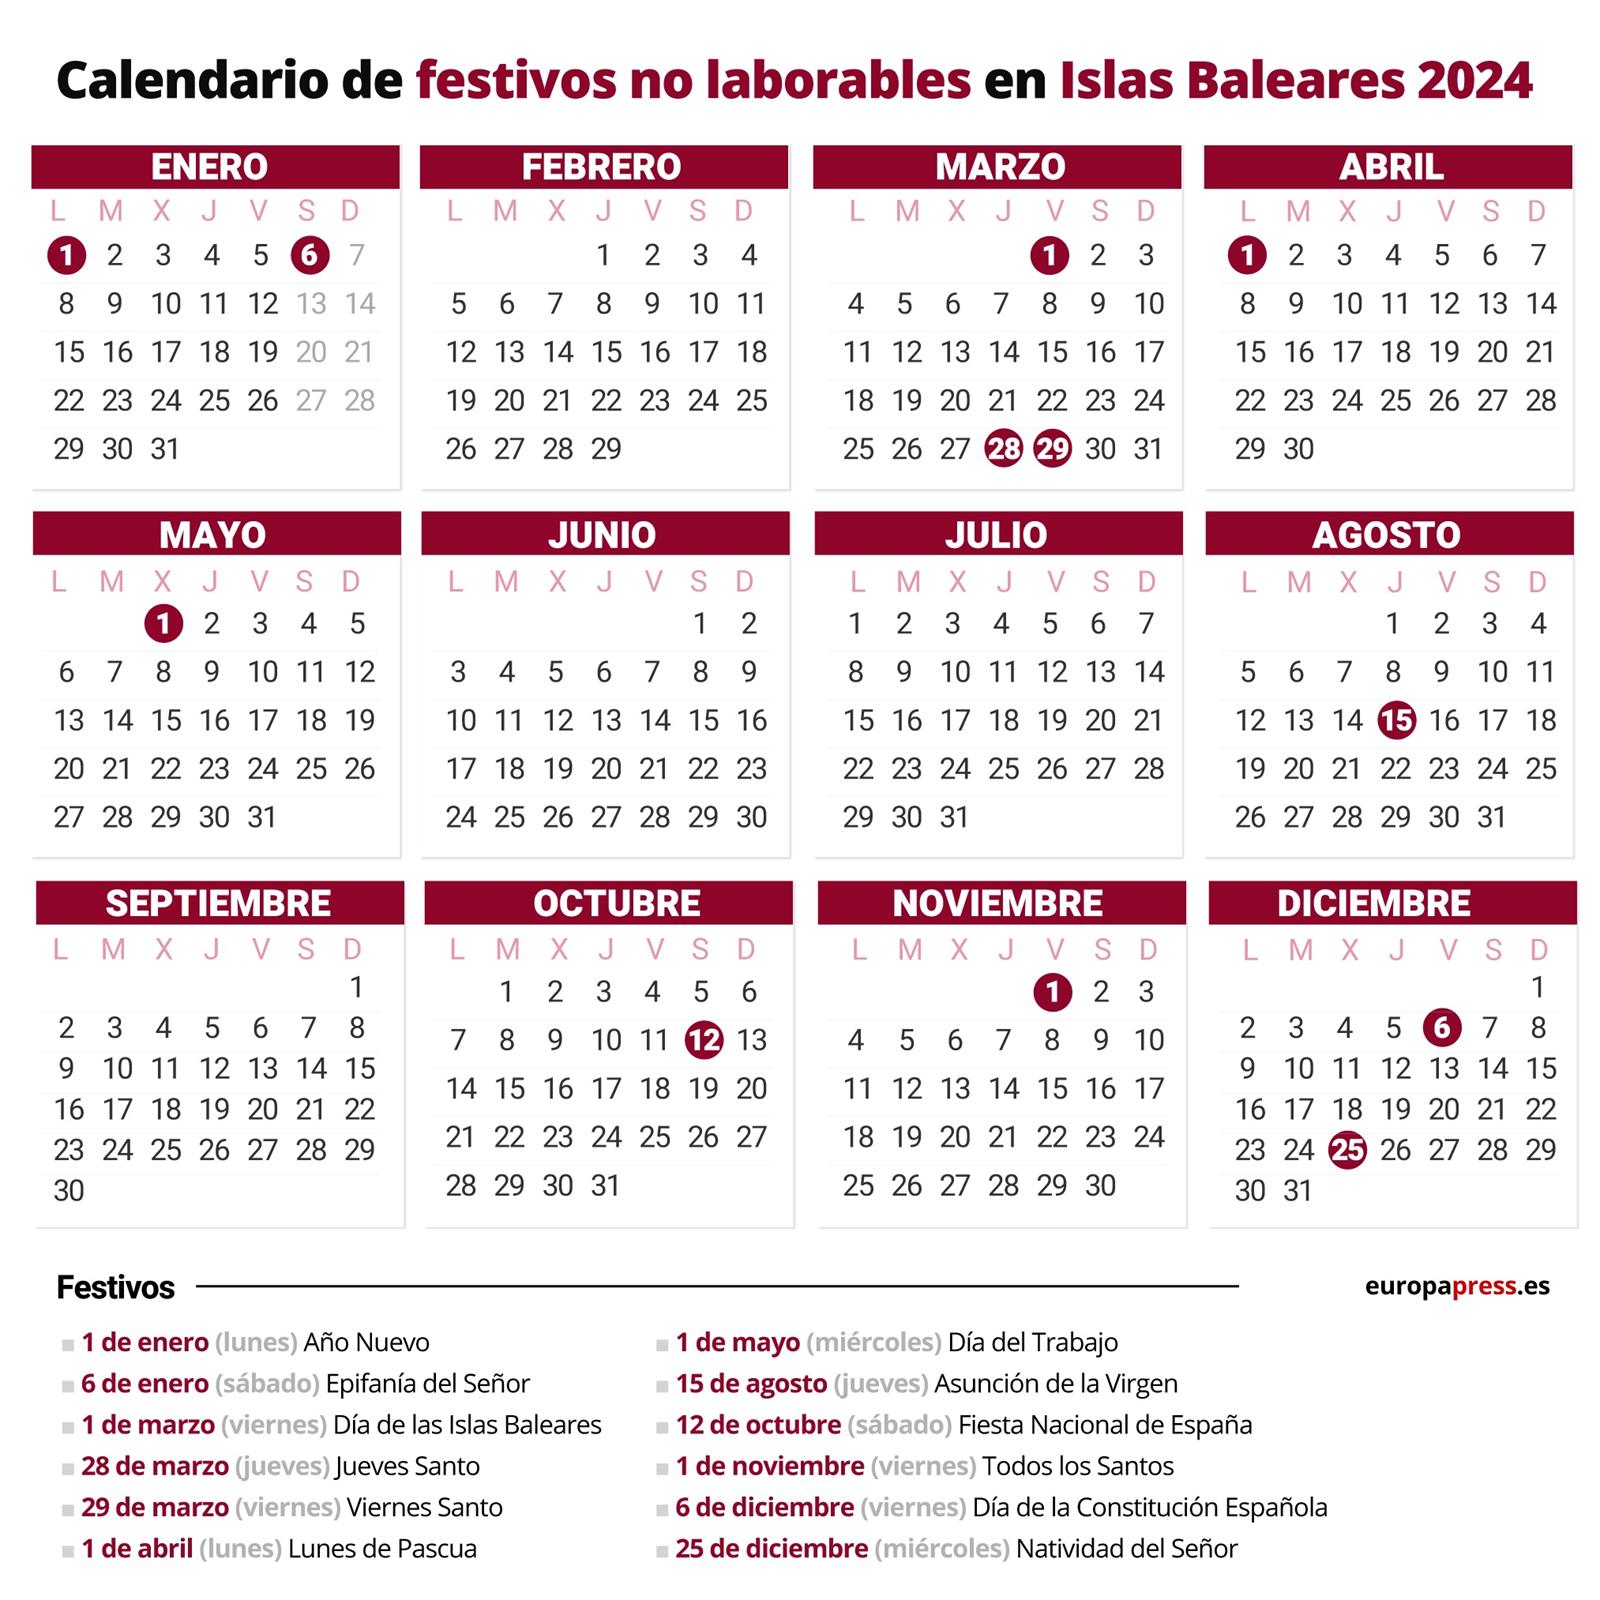 Calendario de festivos laborables en Islas Baleares 2024